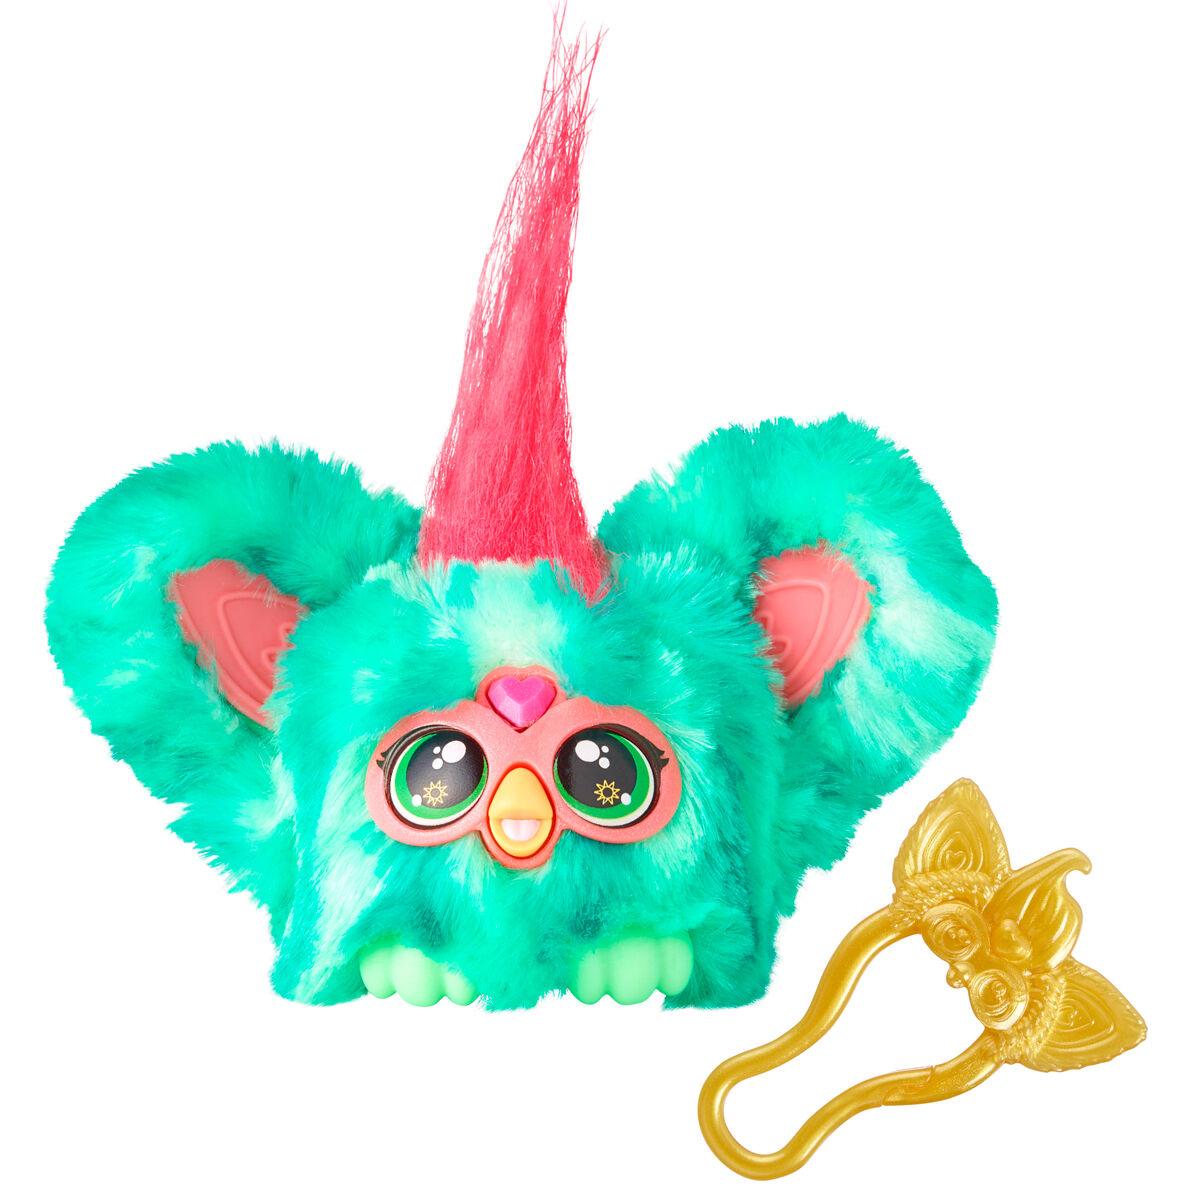 Furby Furblets Mello-Nee Summer Chill Mini Electronic Plush Toy - Ginga Toys